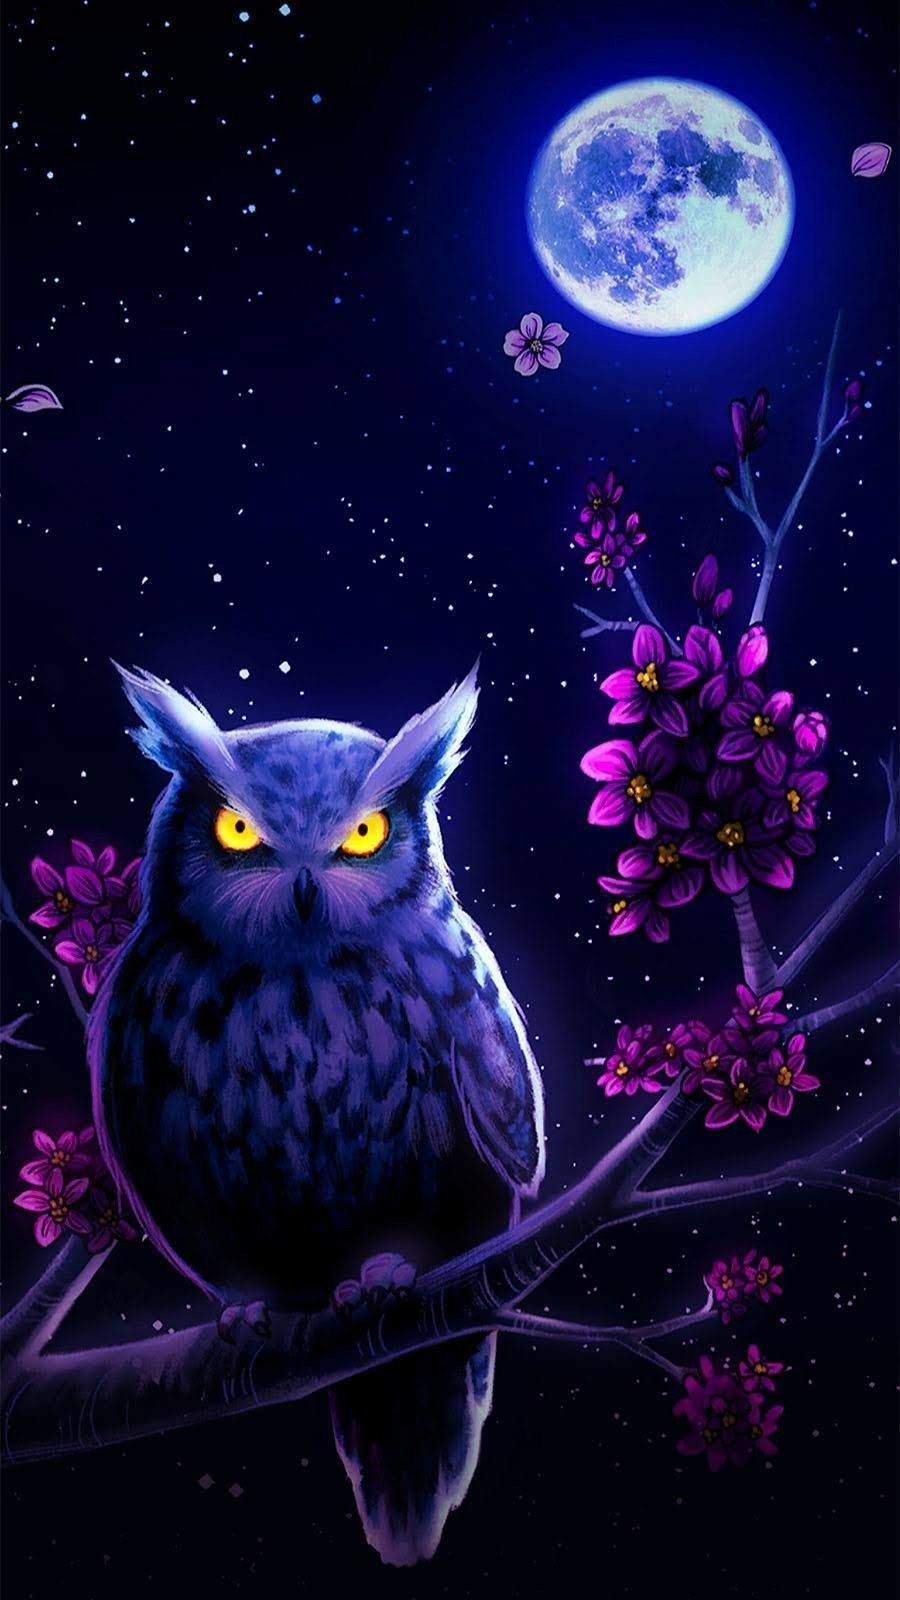 Night owl. Owl wallpaper, Animal wallpaper, Owl picture